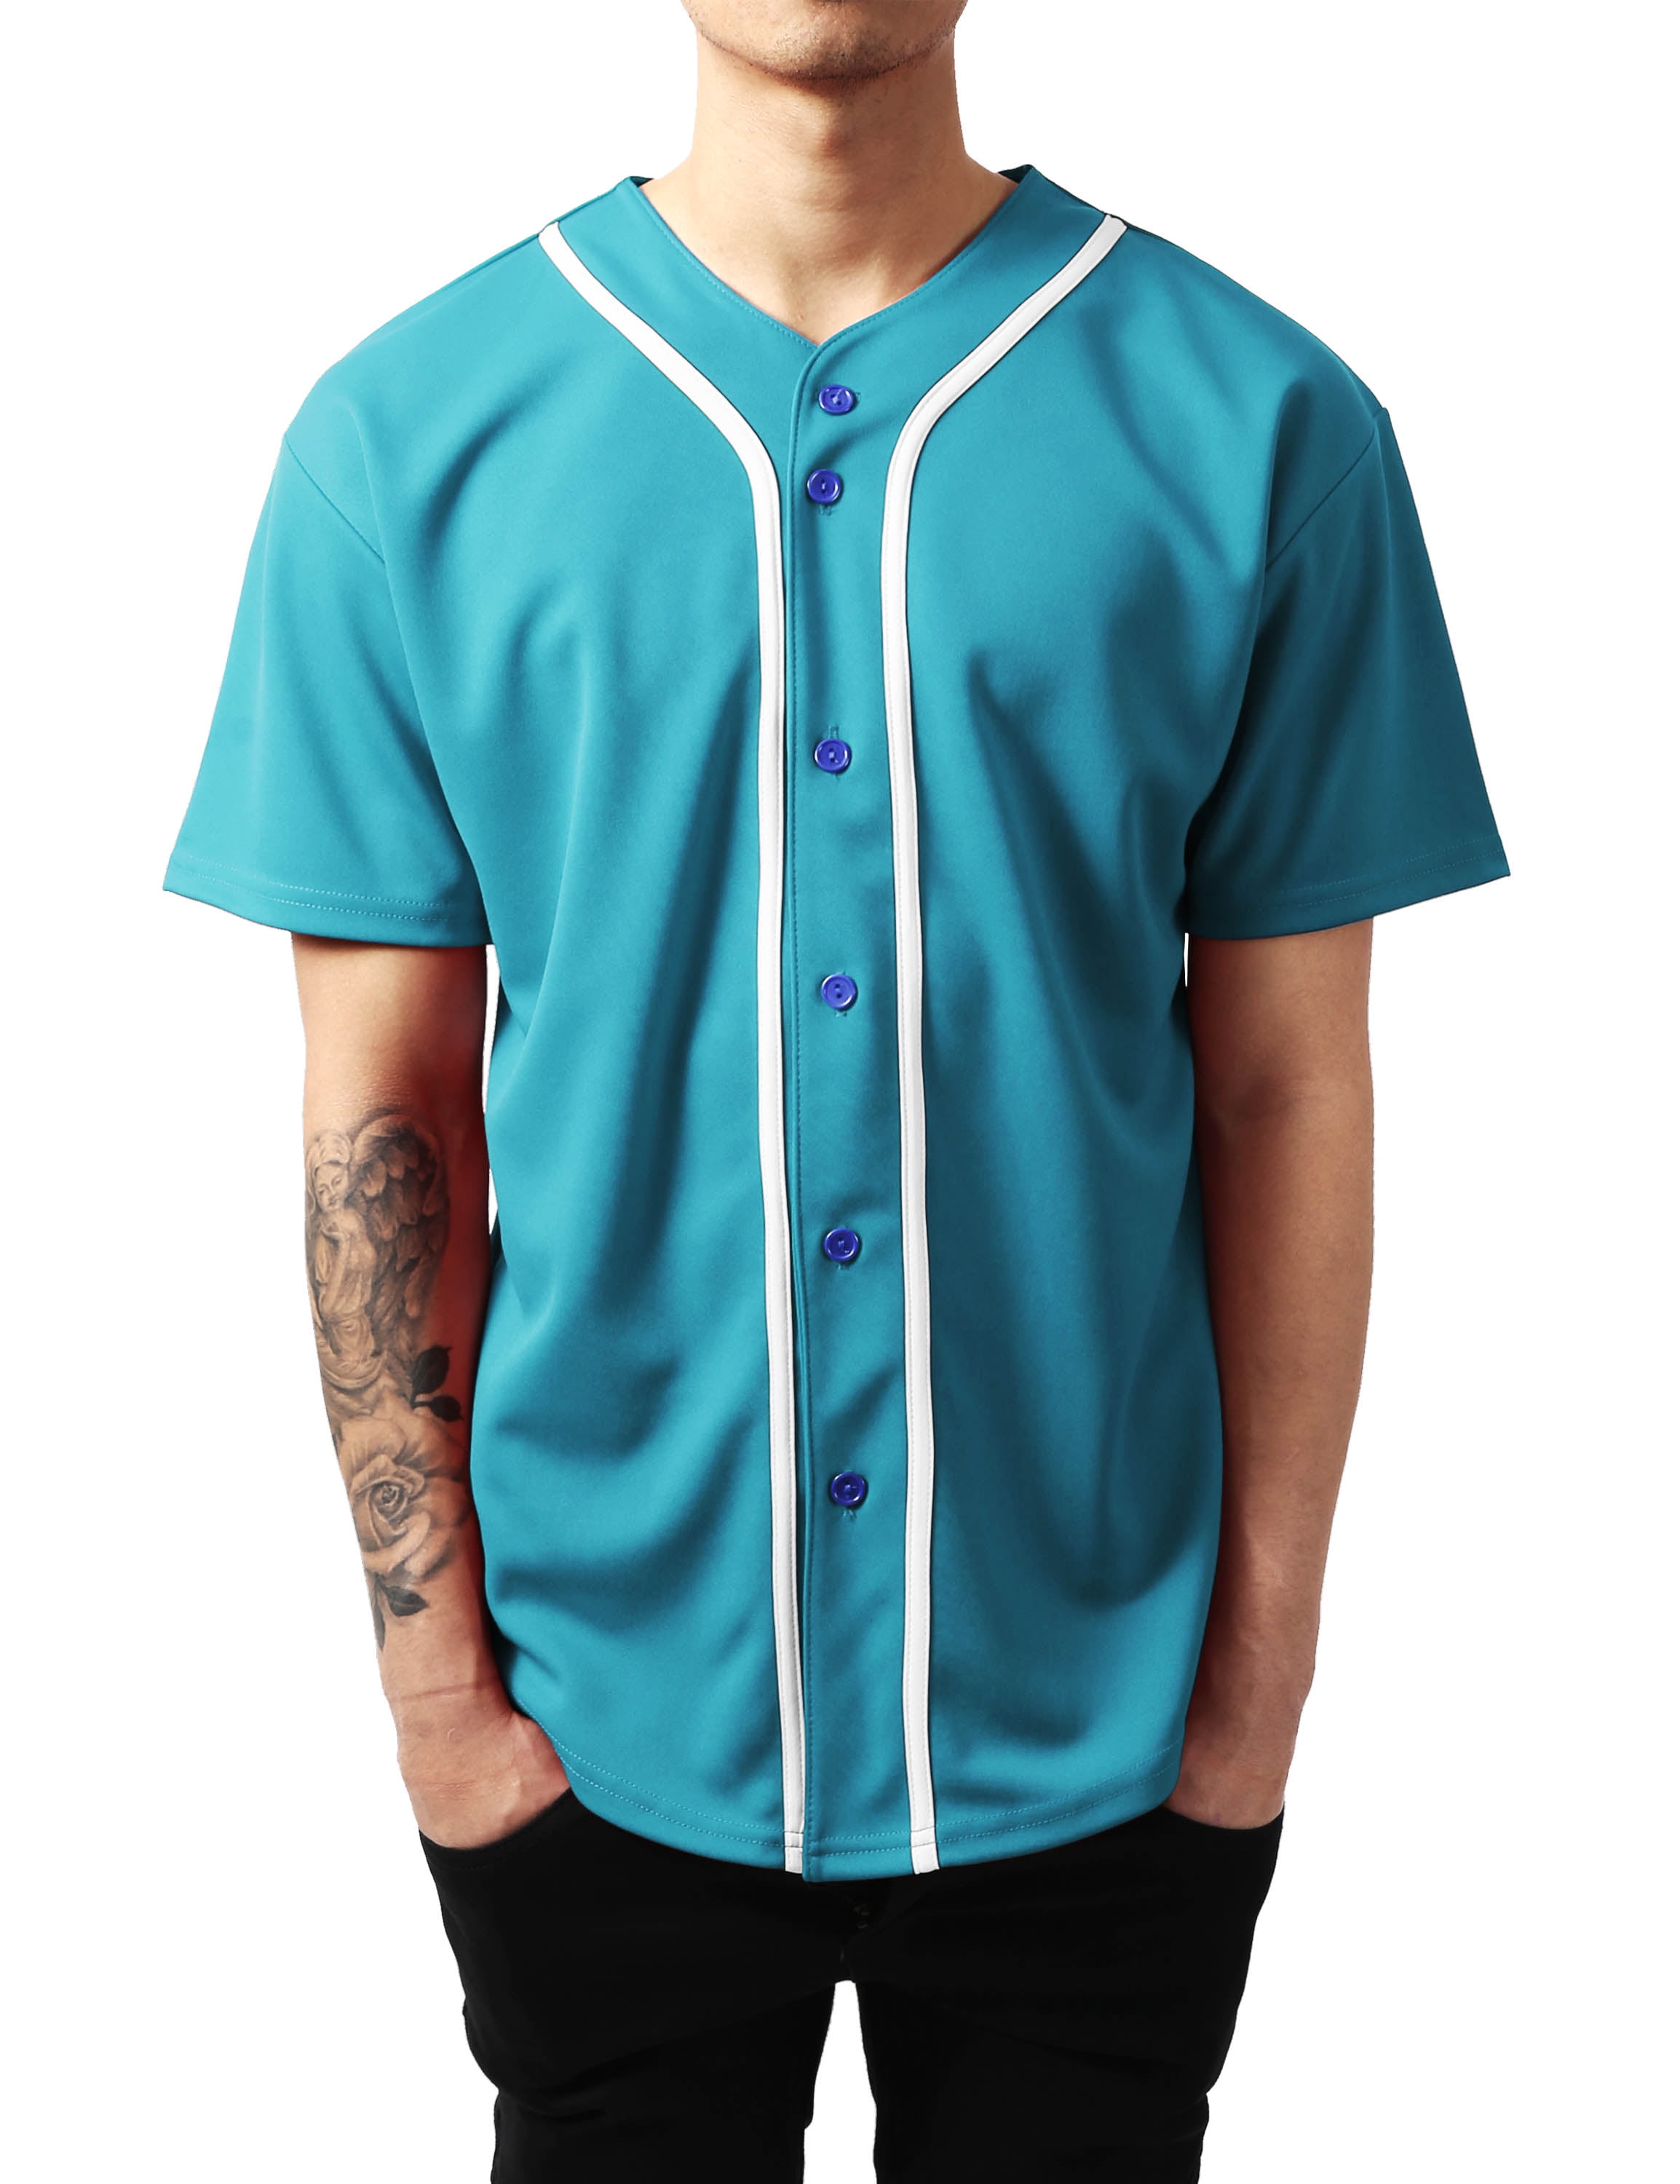 Men's Baseball Jersey Raglan T Shirt Mesh Sports Fashion Hipster Casual Jacket 